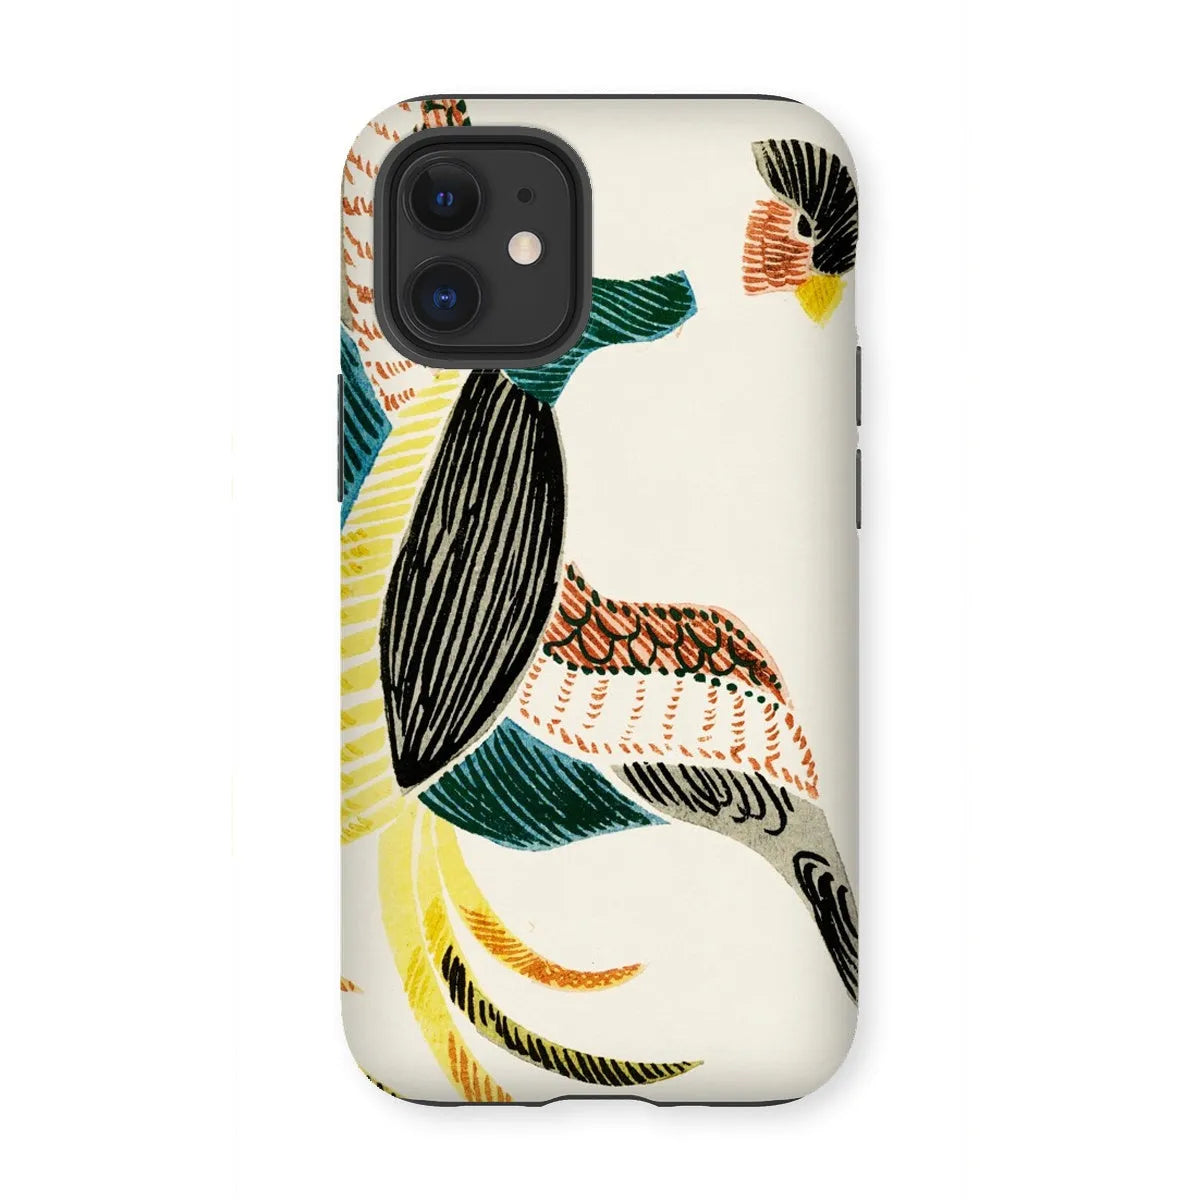 Woodblock Crane - Japanese Bird Phone Case - Taguchi Tomoki - Iphone 12 Mini / Matte - Mobile Phone Cases - Aesthetic